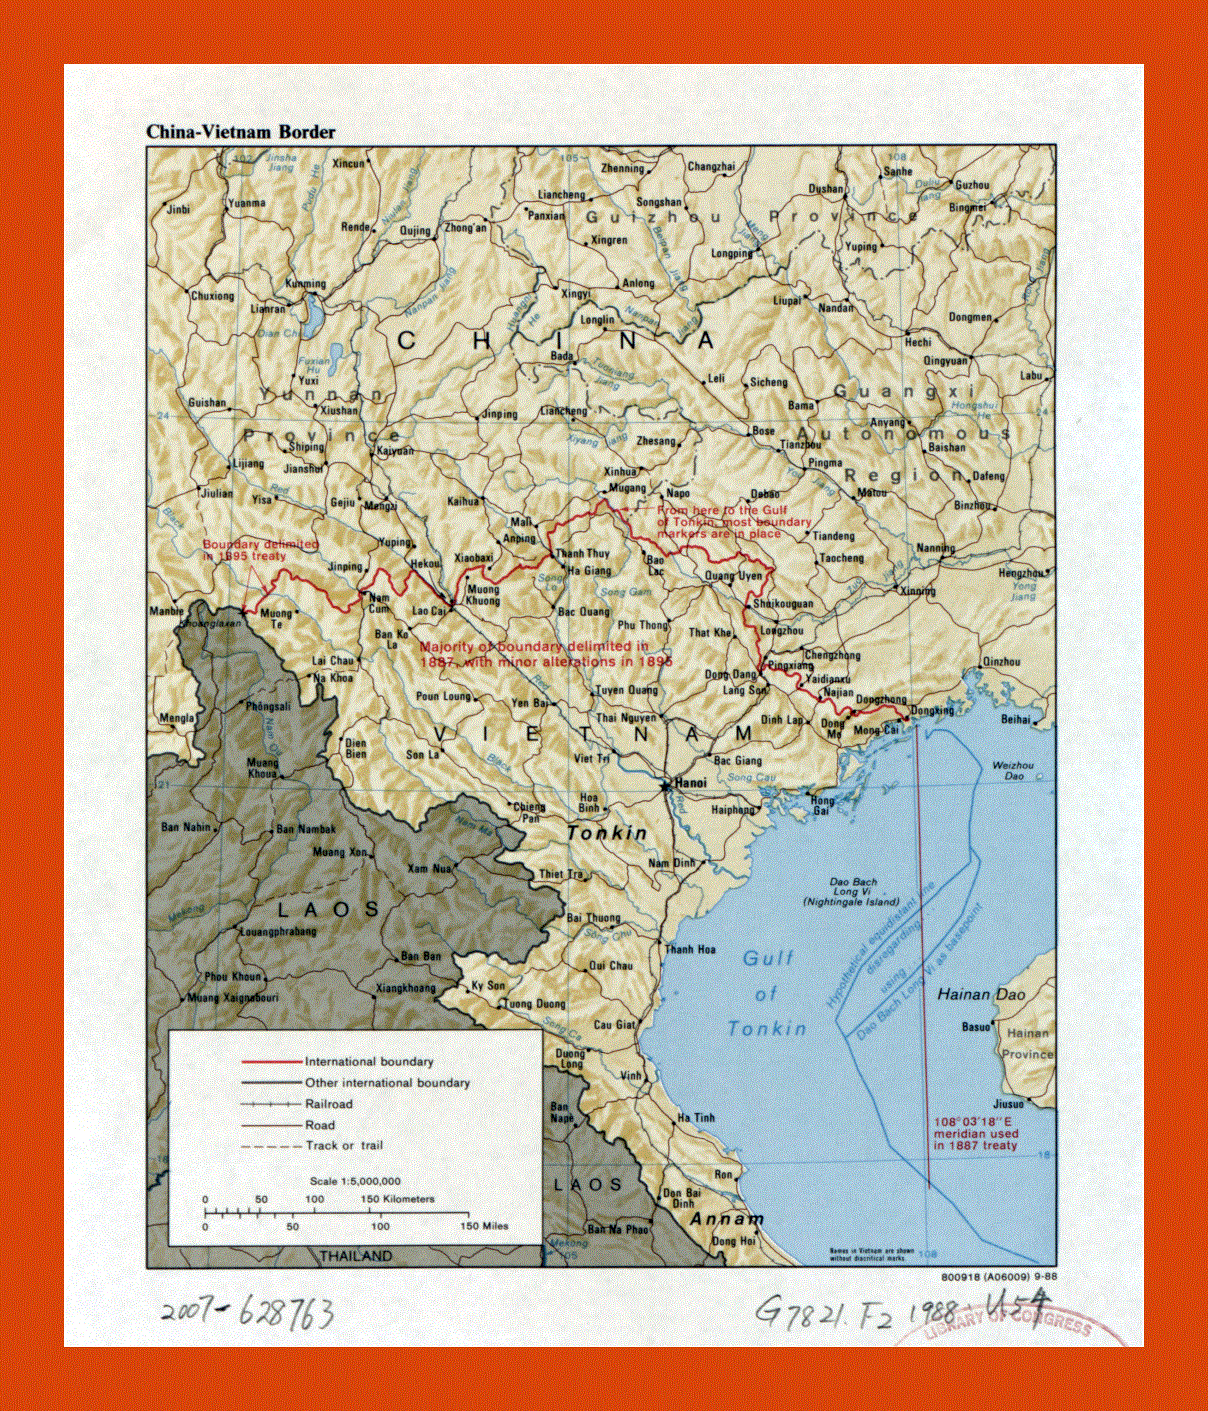 China - Vietnam border map - 1988